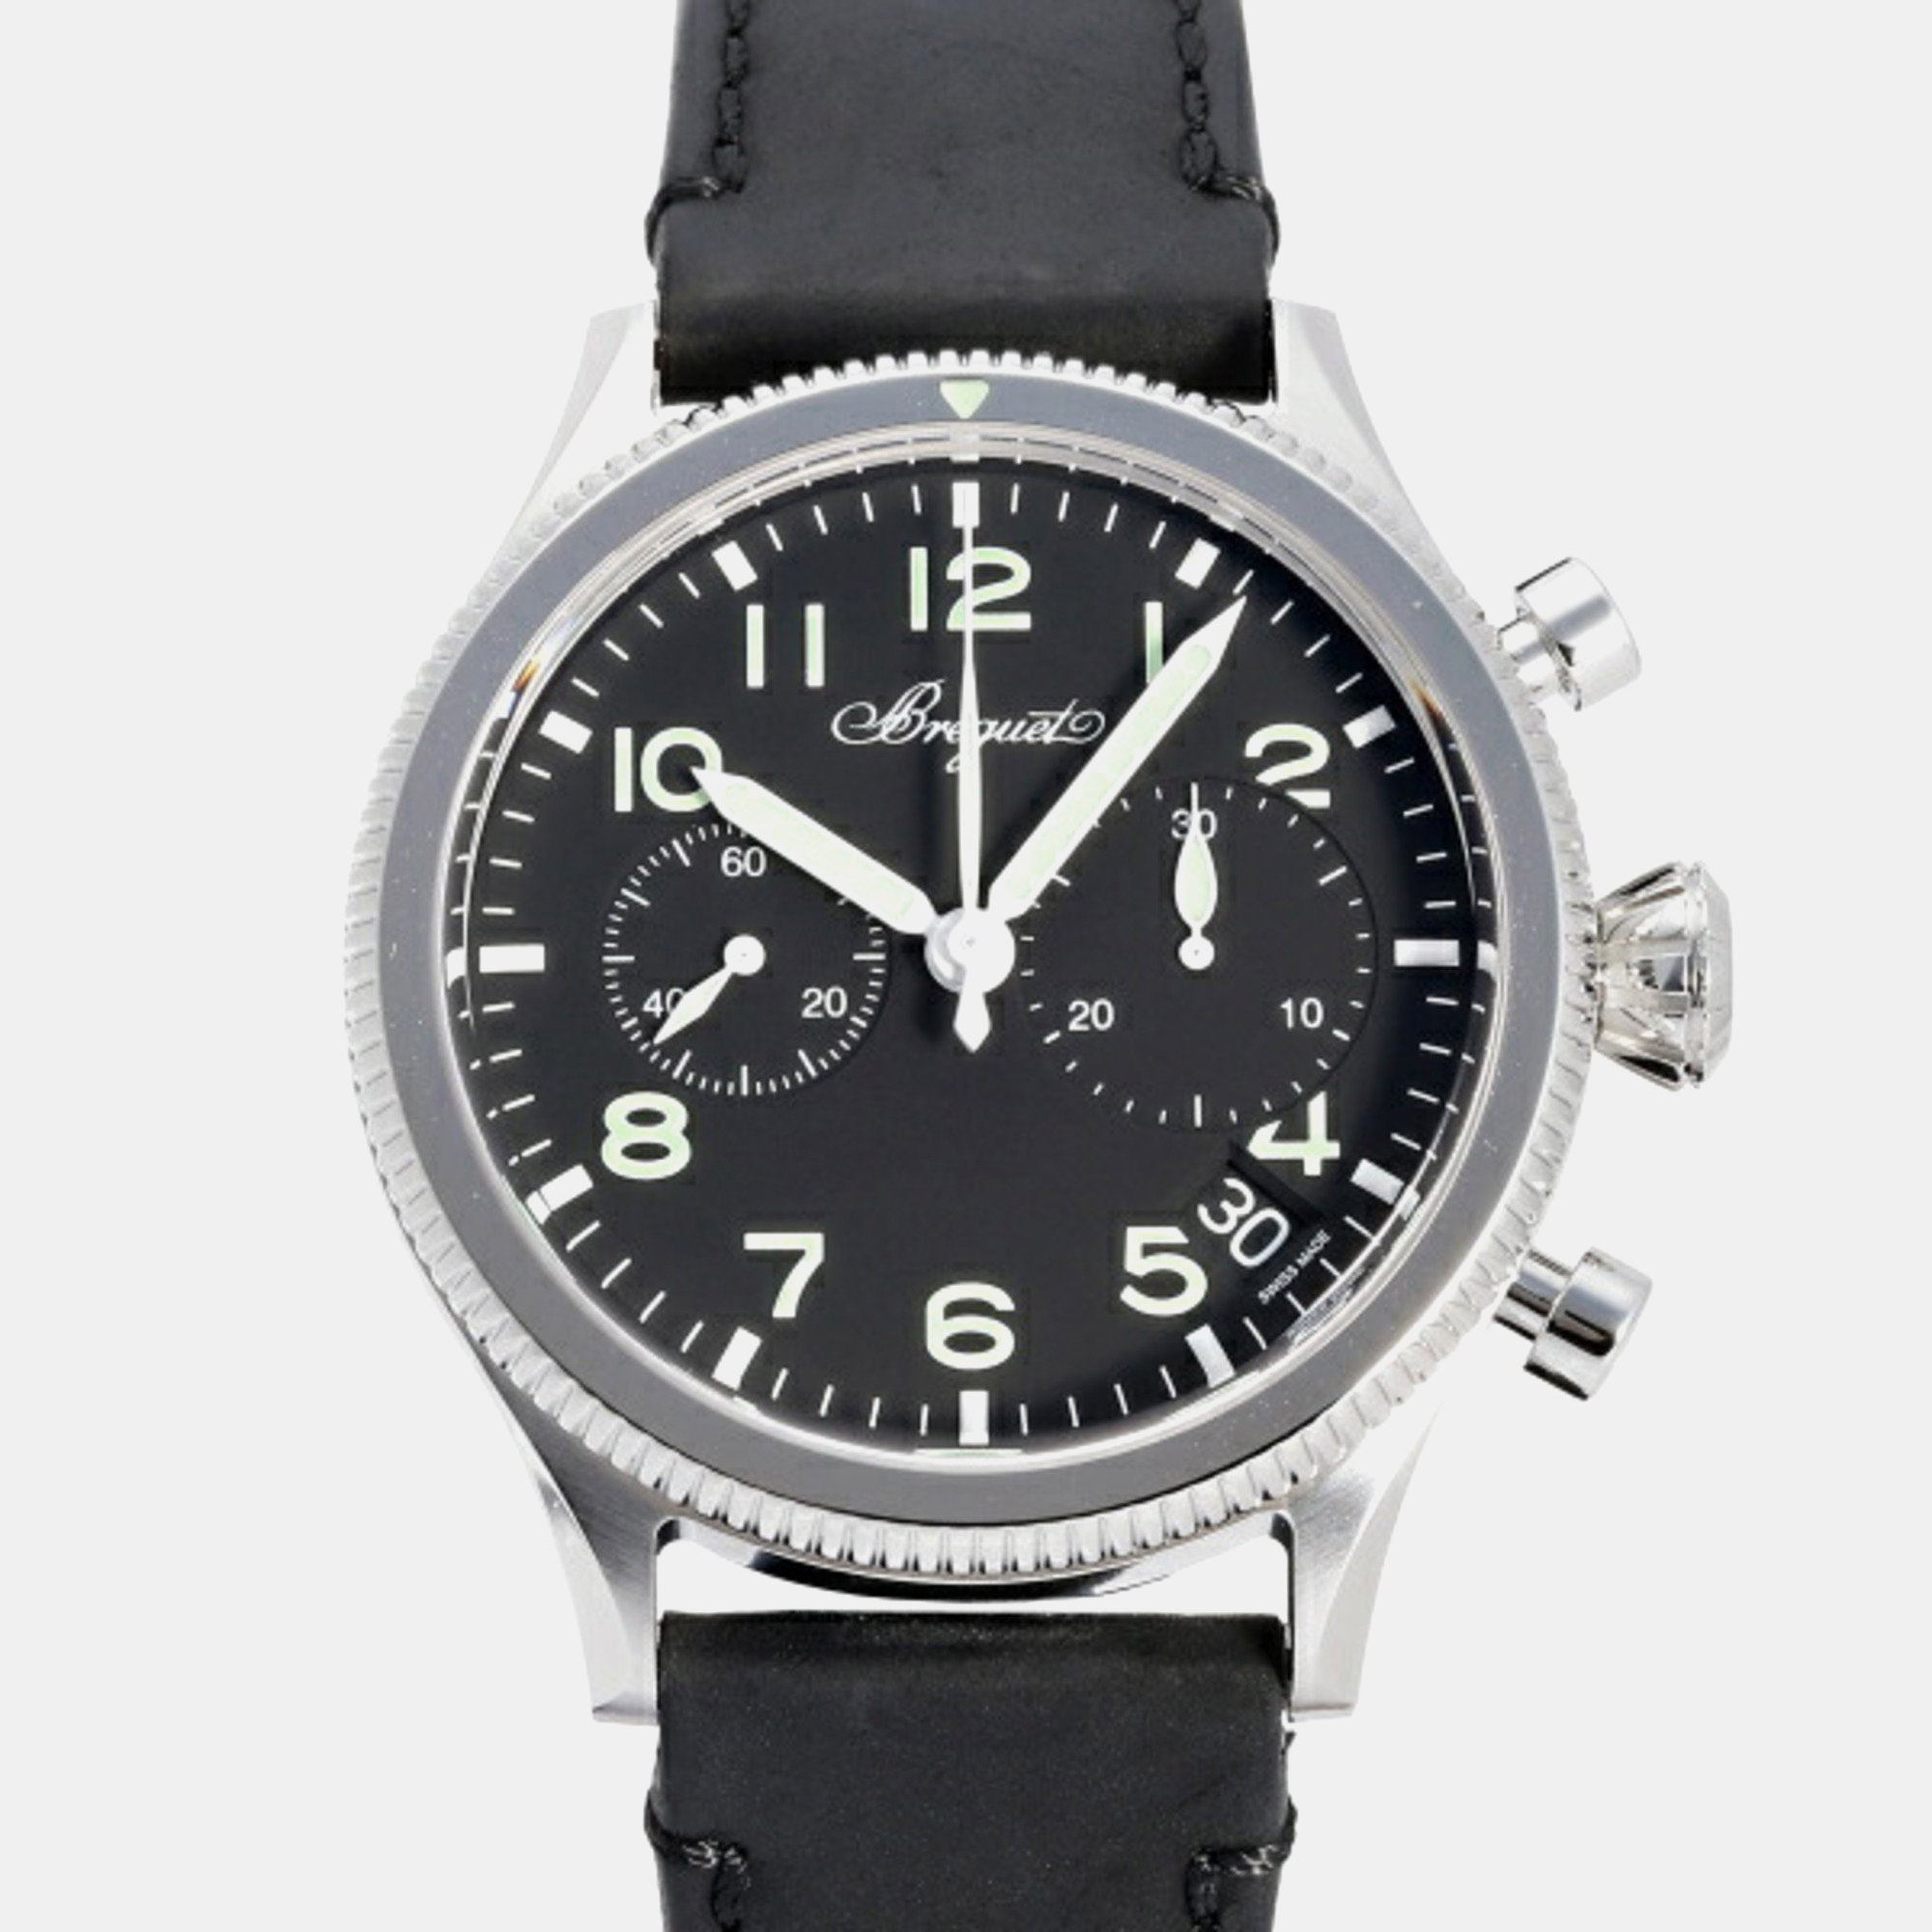 Breguet black stainless steel transaltantique type  automatic men's wristwatch 42 mm